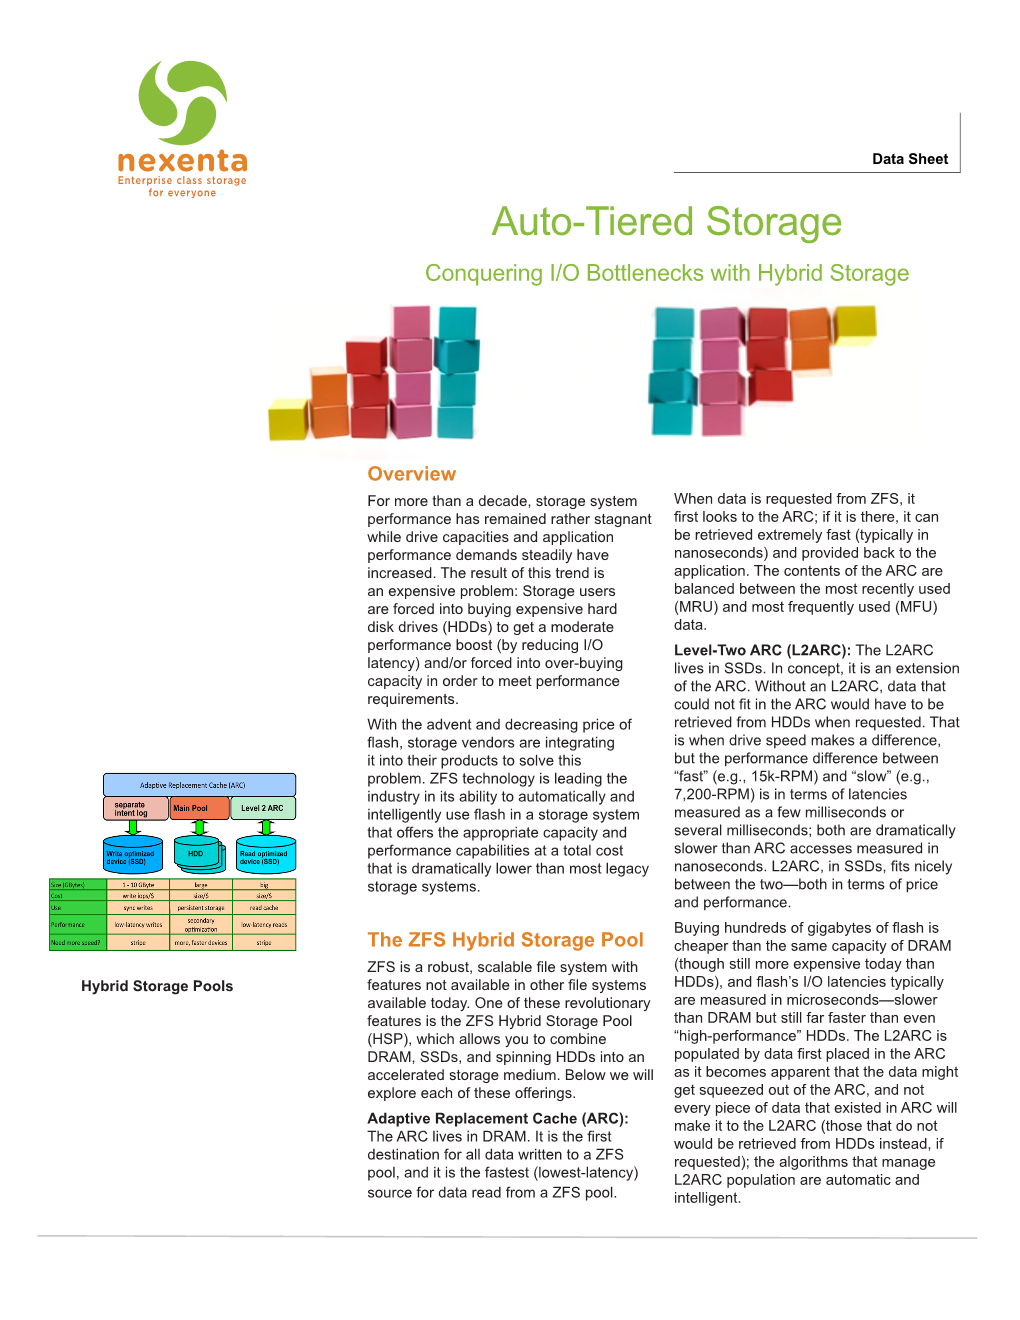 Auto-Tiered Storage Conquering I/O Bottlenecks with Hybrid Storage